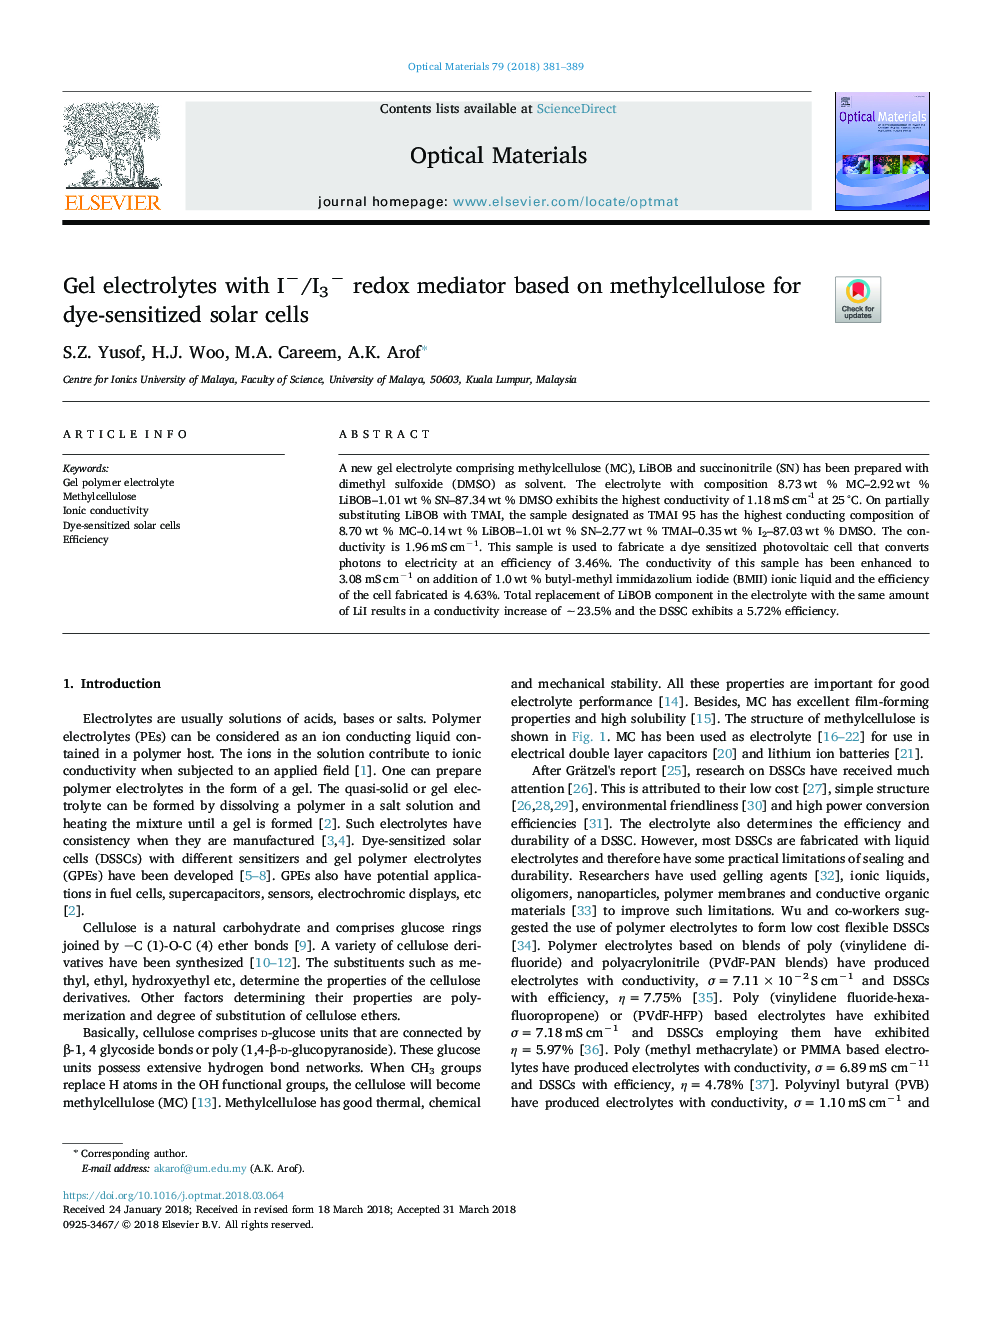 Gel electrolytes with Iâ/I3â redox mediator based on methylcellulose for dye-sensitized solar cells